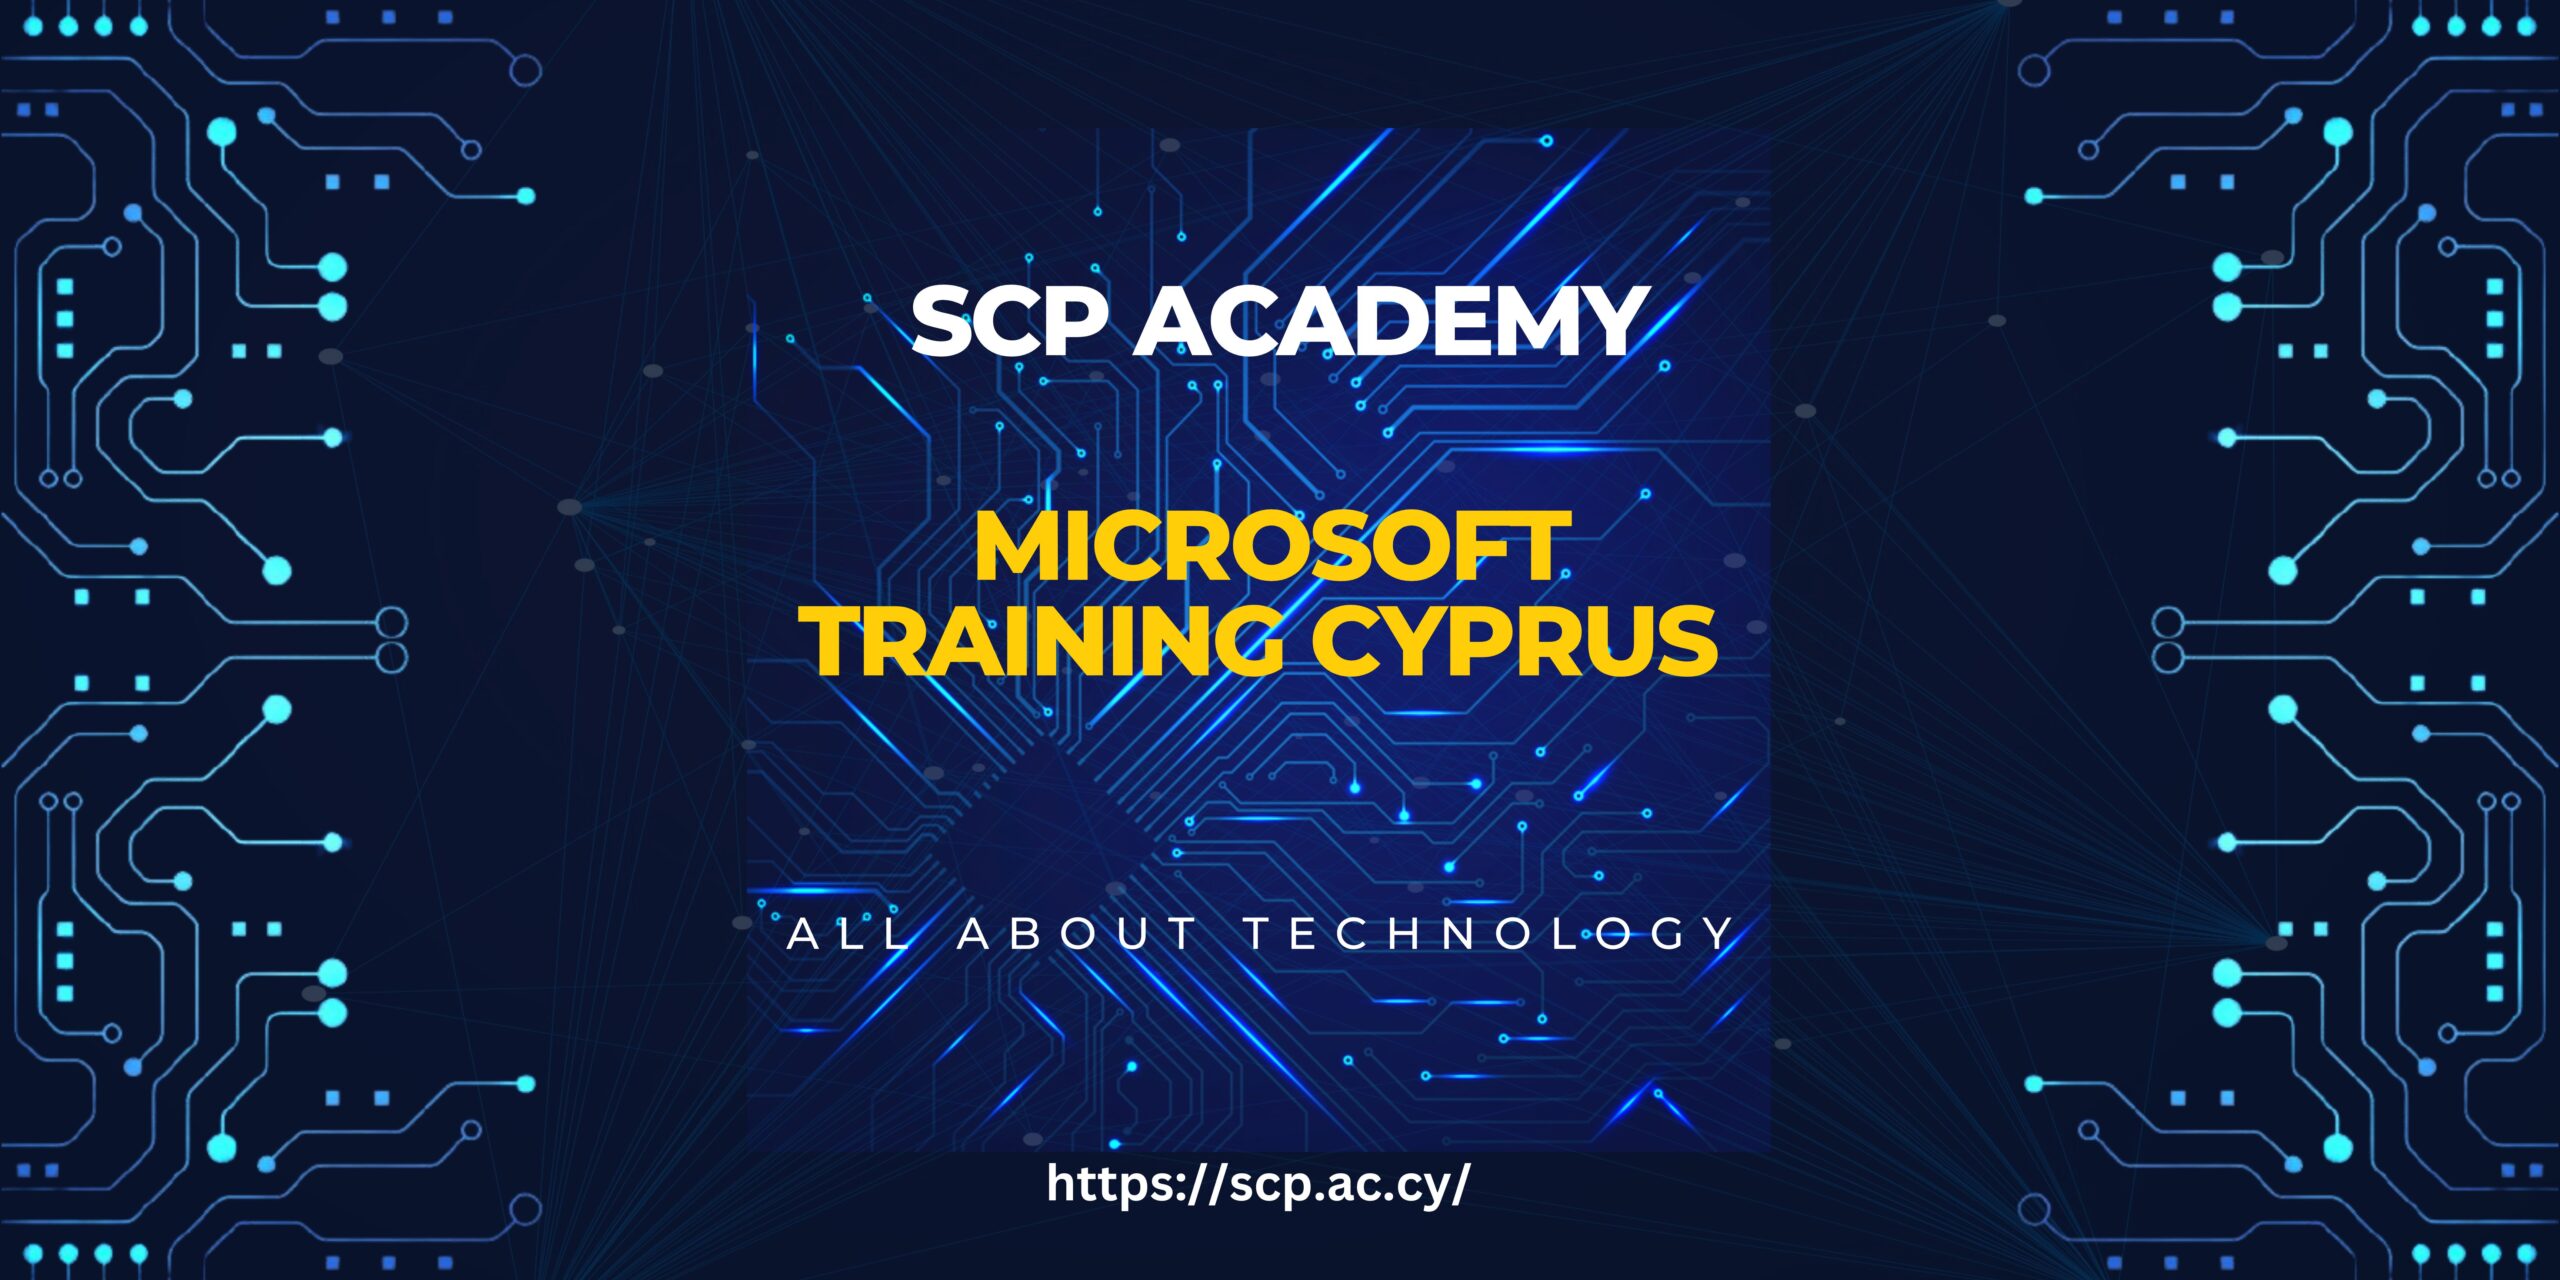 Microsoft training in Cyprus